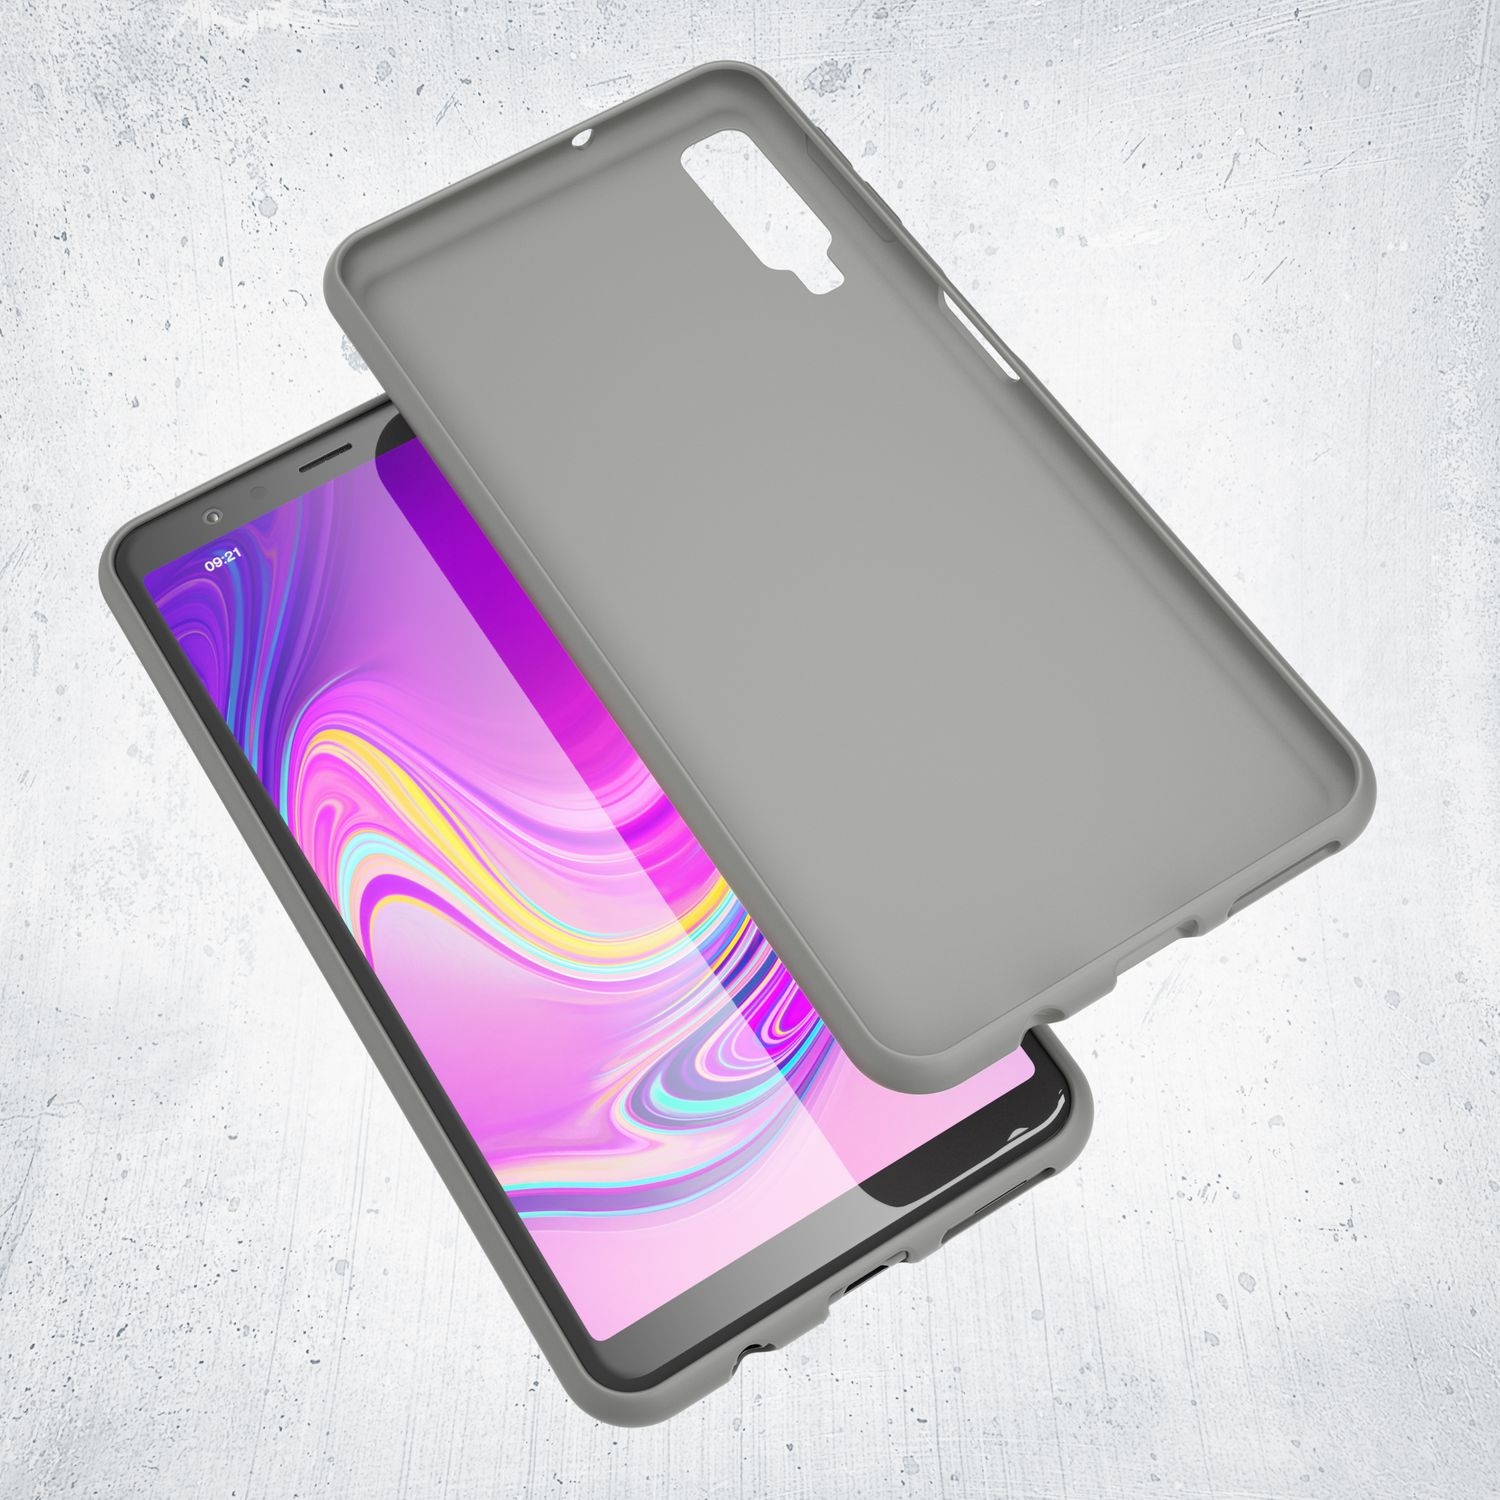 Samsung, Silikon Hülle, Neon A7 Grau (2018), Galaxy NALIA Backcover,